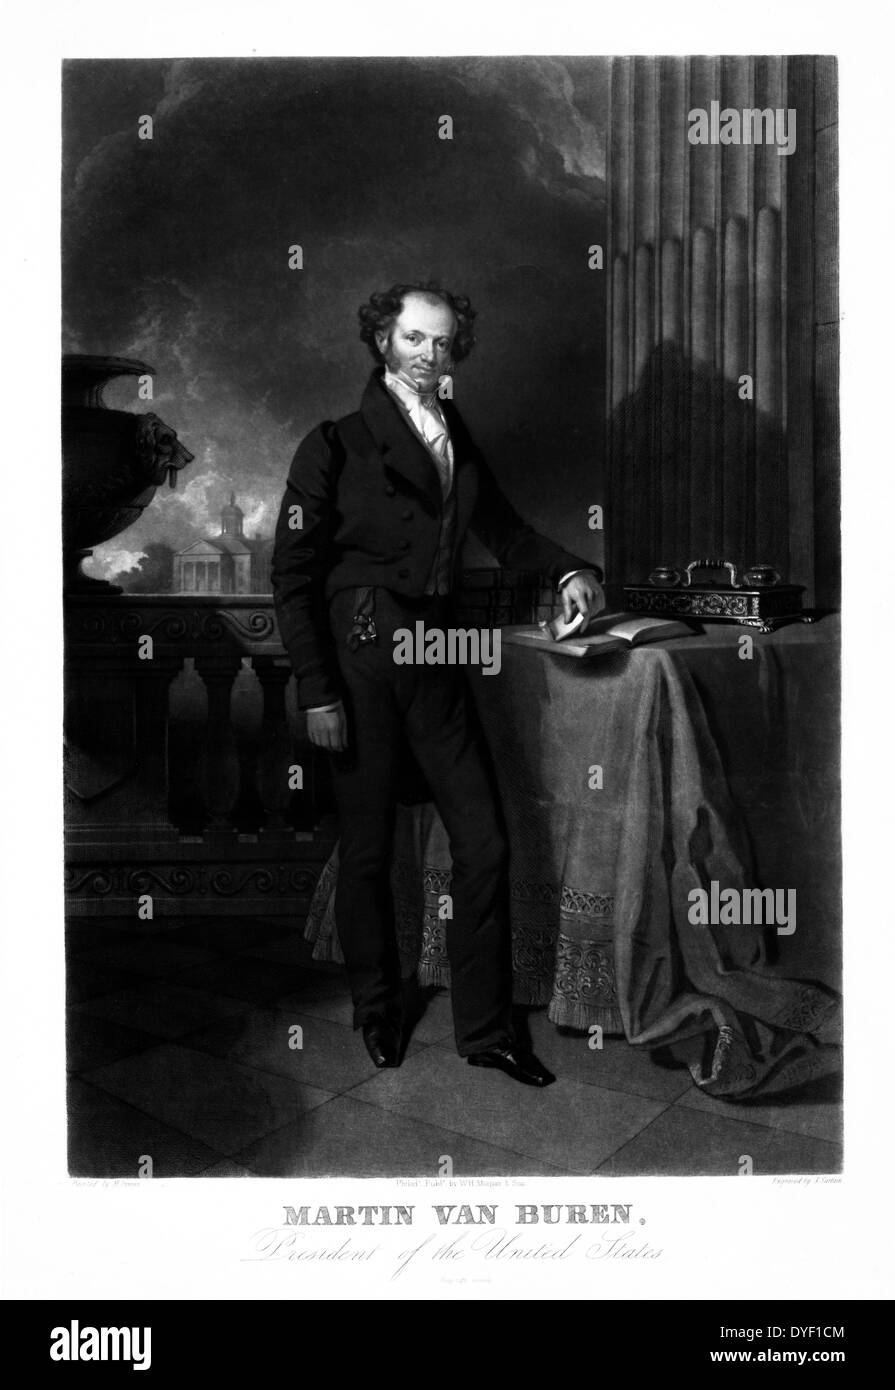 Martin Van Buren, President of the United States by engraver John Sartain 1808-1897 and artist Henry Inman. Circa 1839-1841. Mezzotint print. Stock Photo